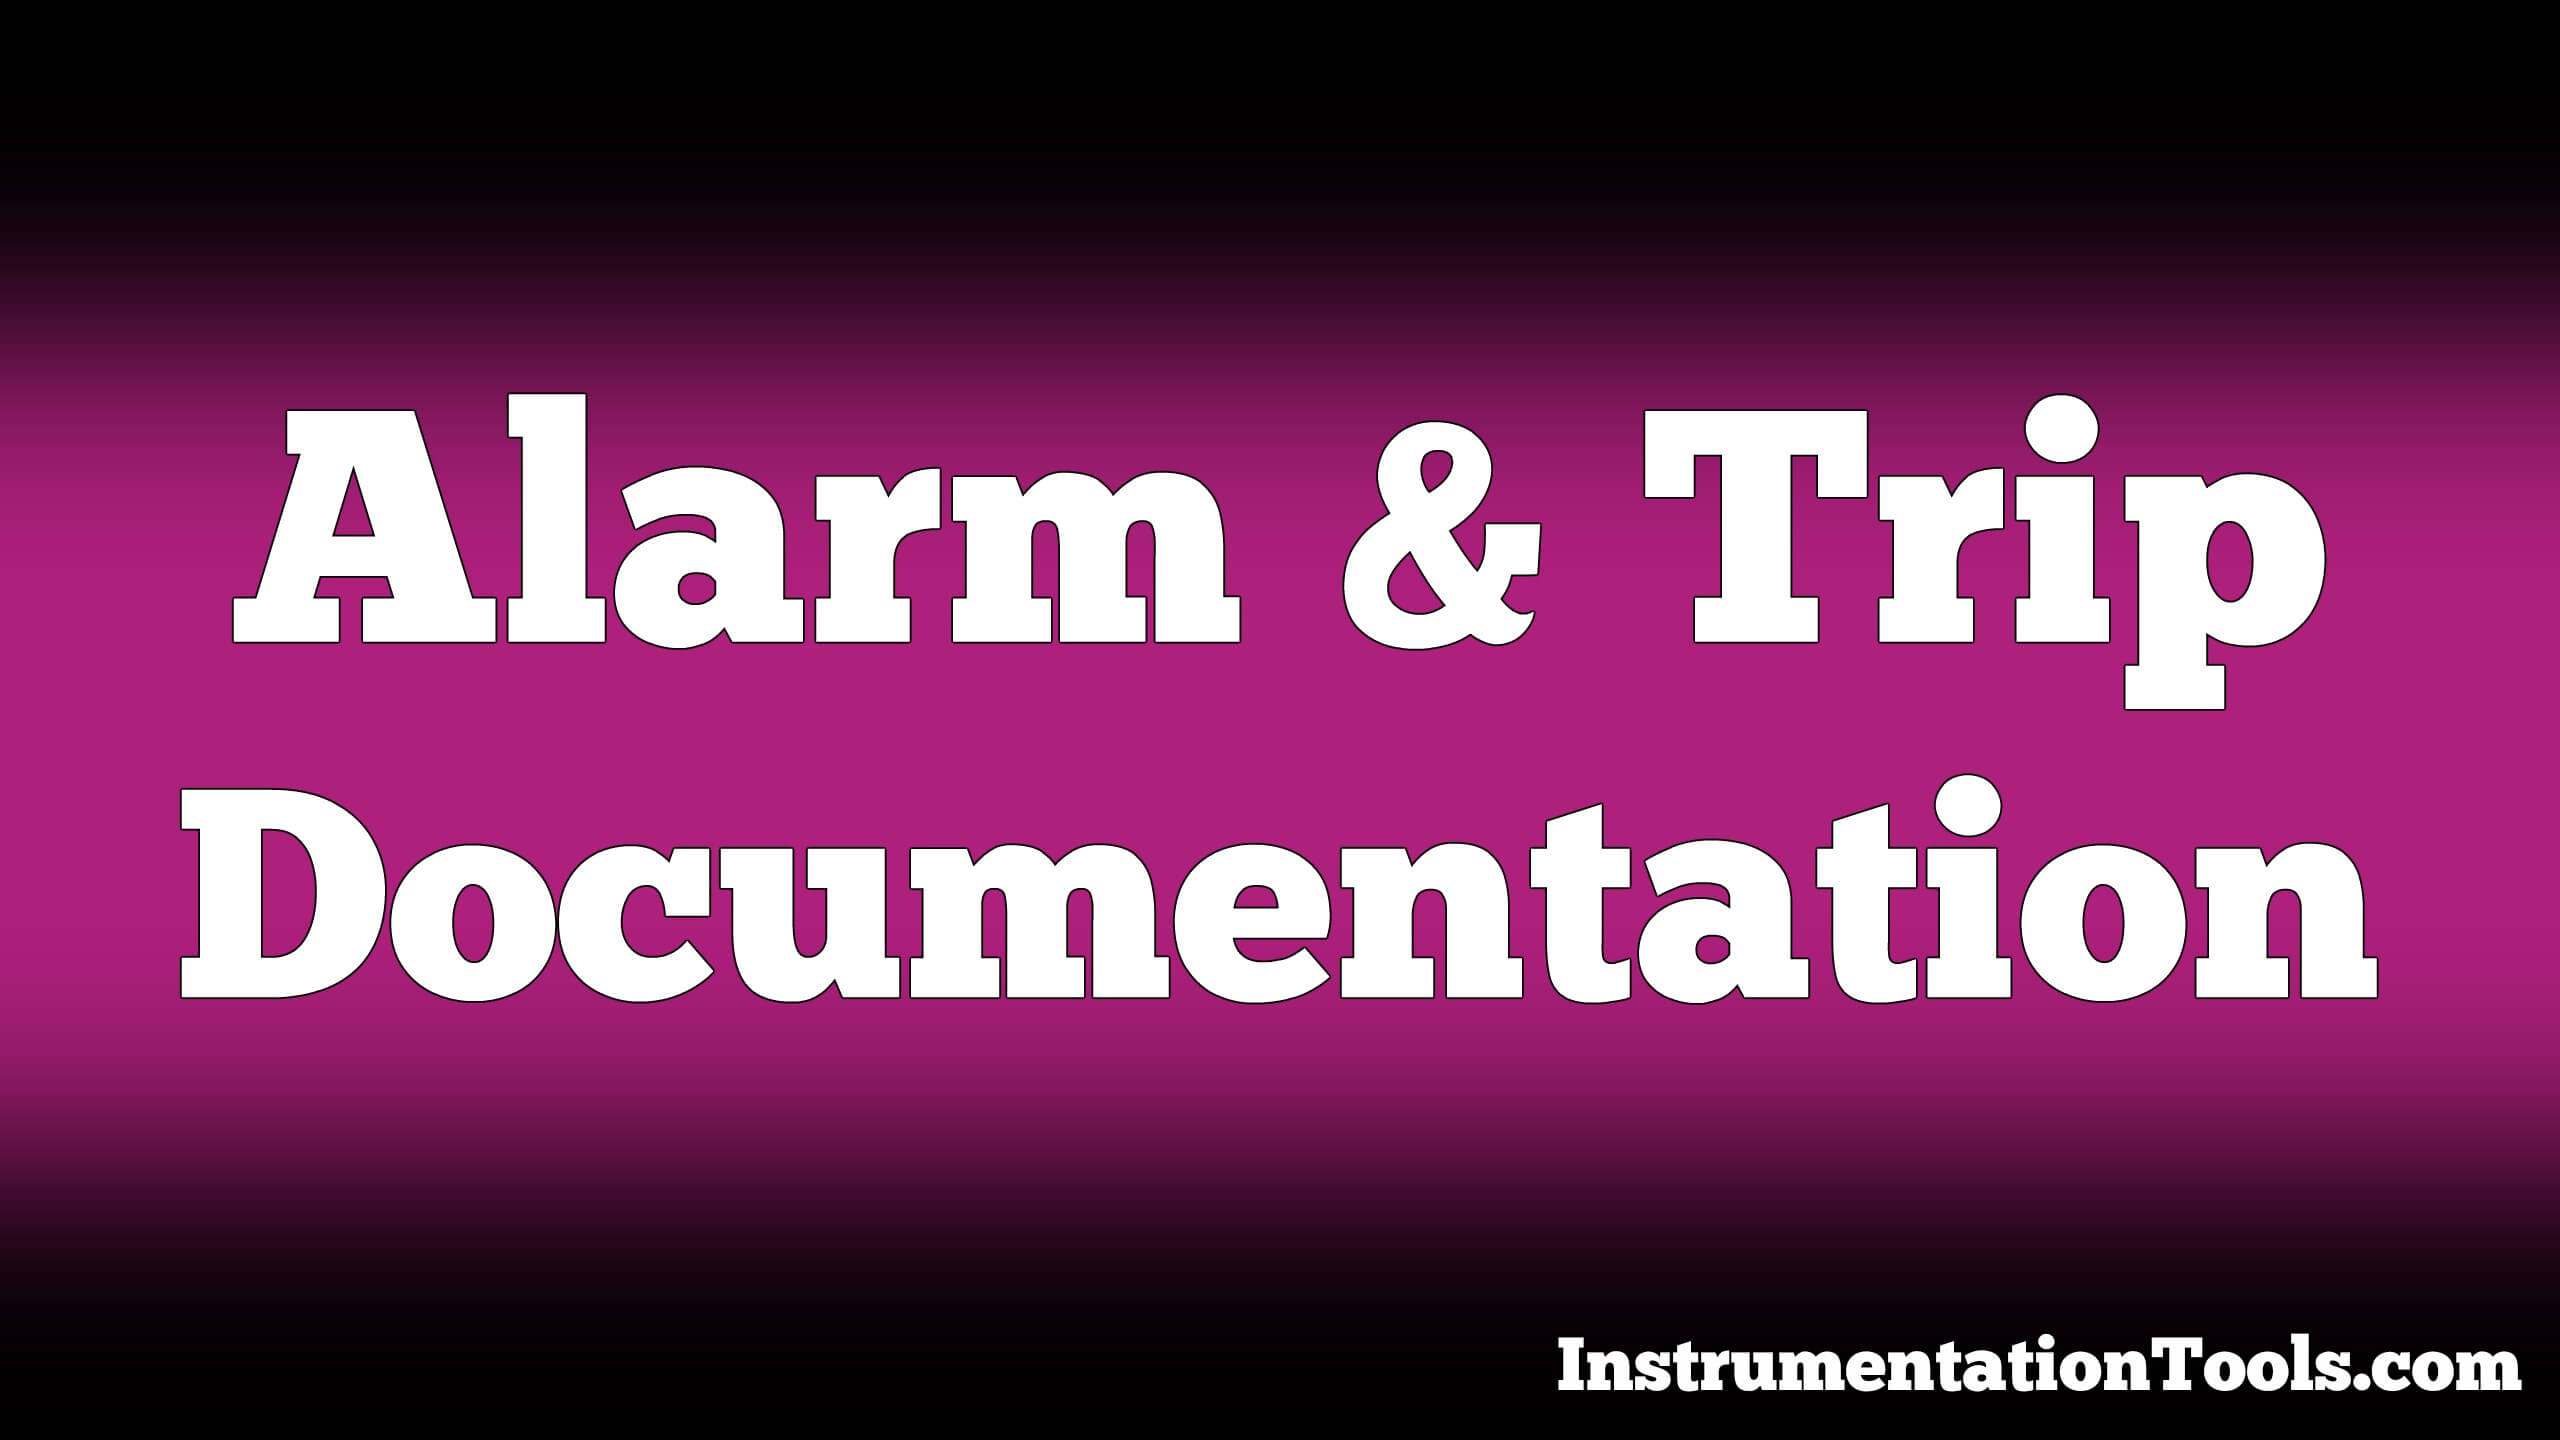 PLC Alarm and Trip Documentation